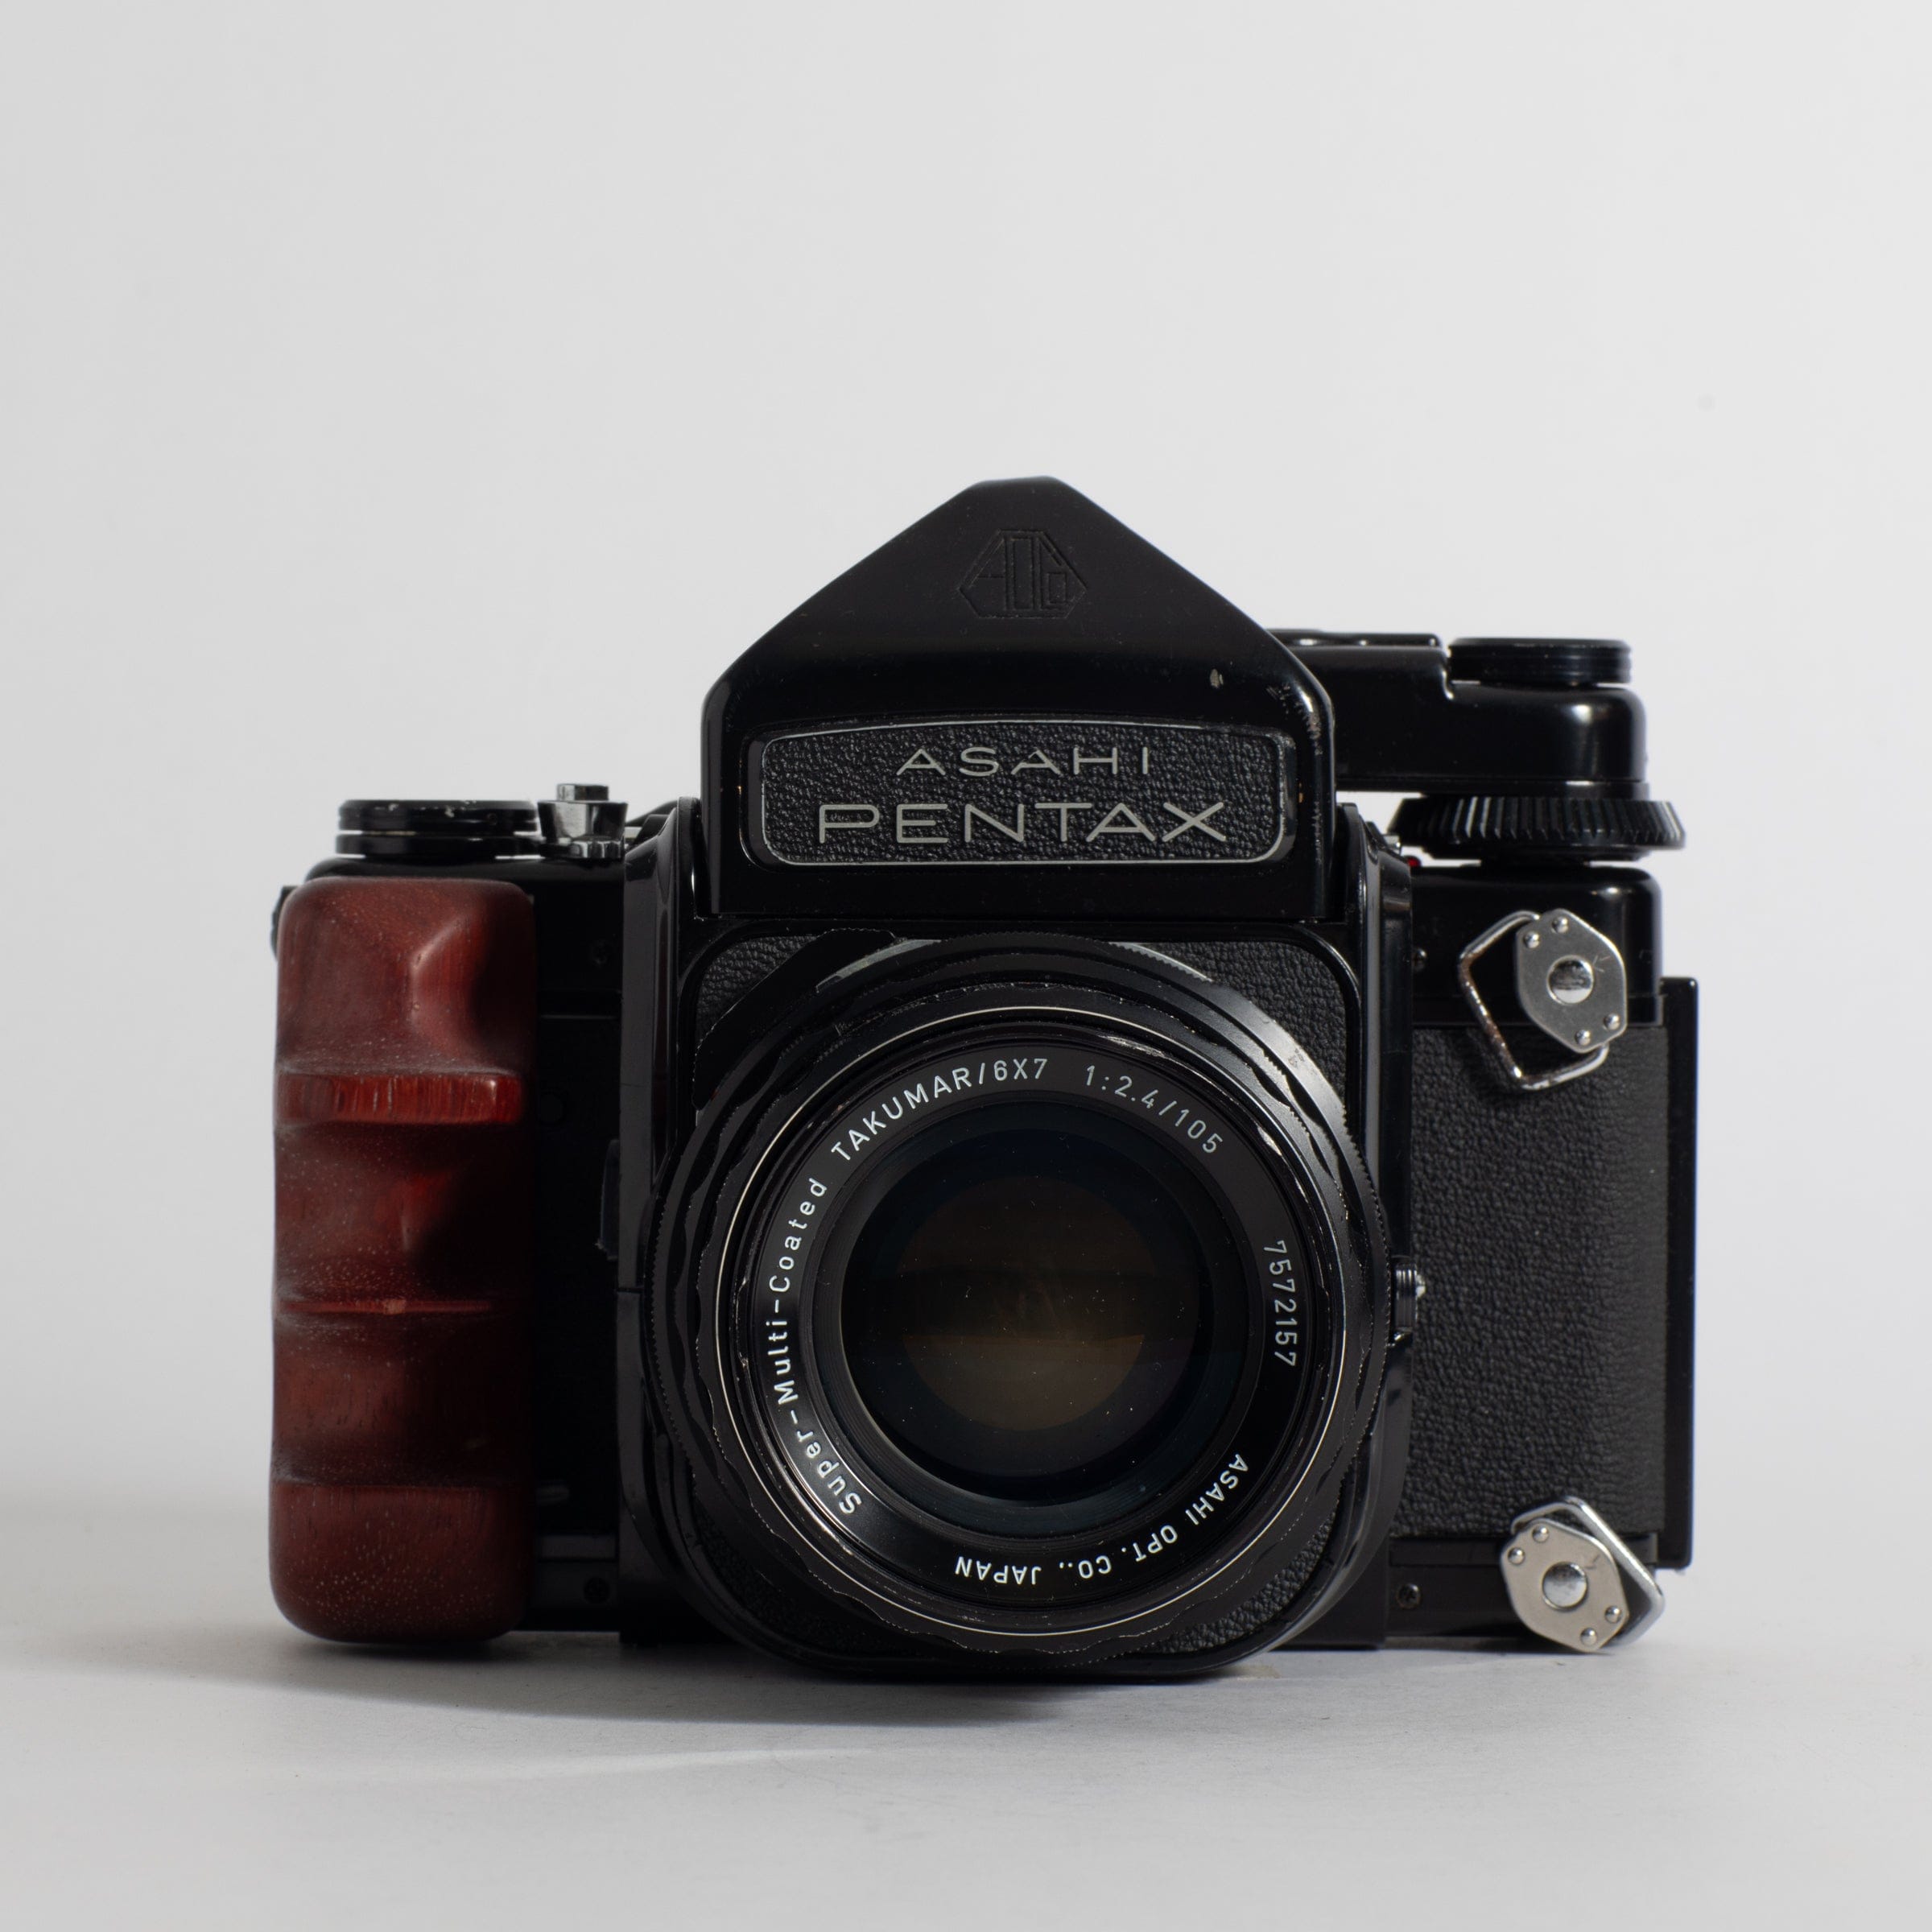 SMC PENTAX 67 LS 6x7 165mm f4 Prime Telephoto MF Lens – Film 